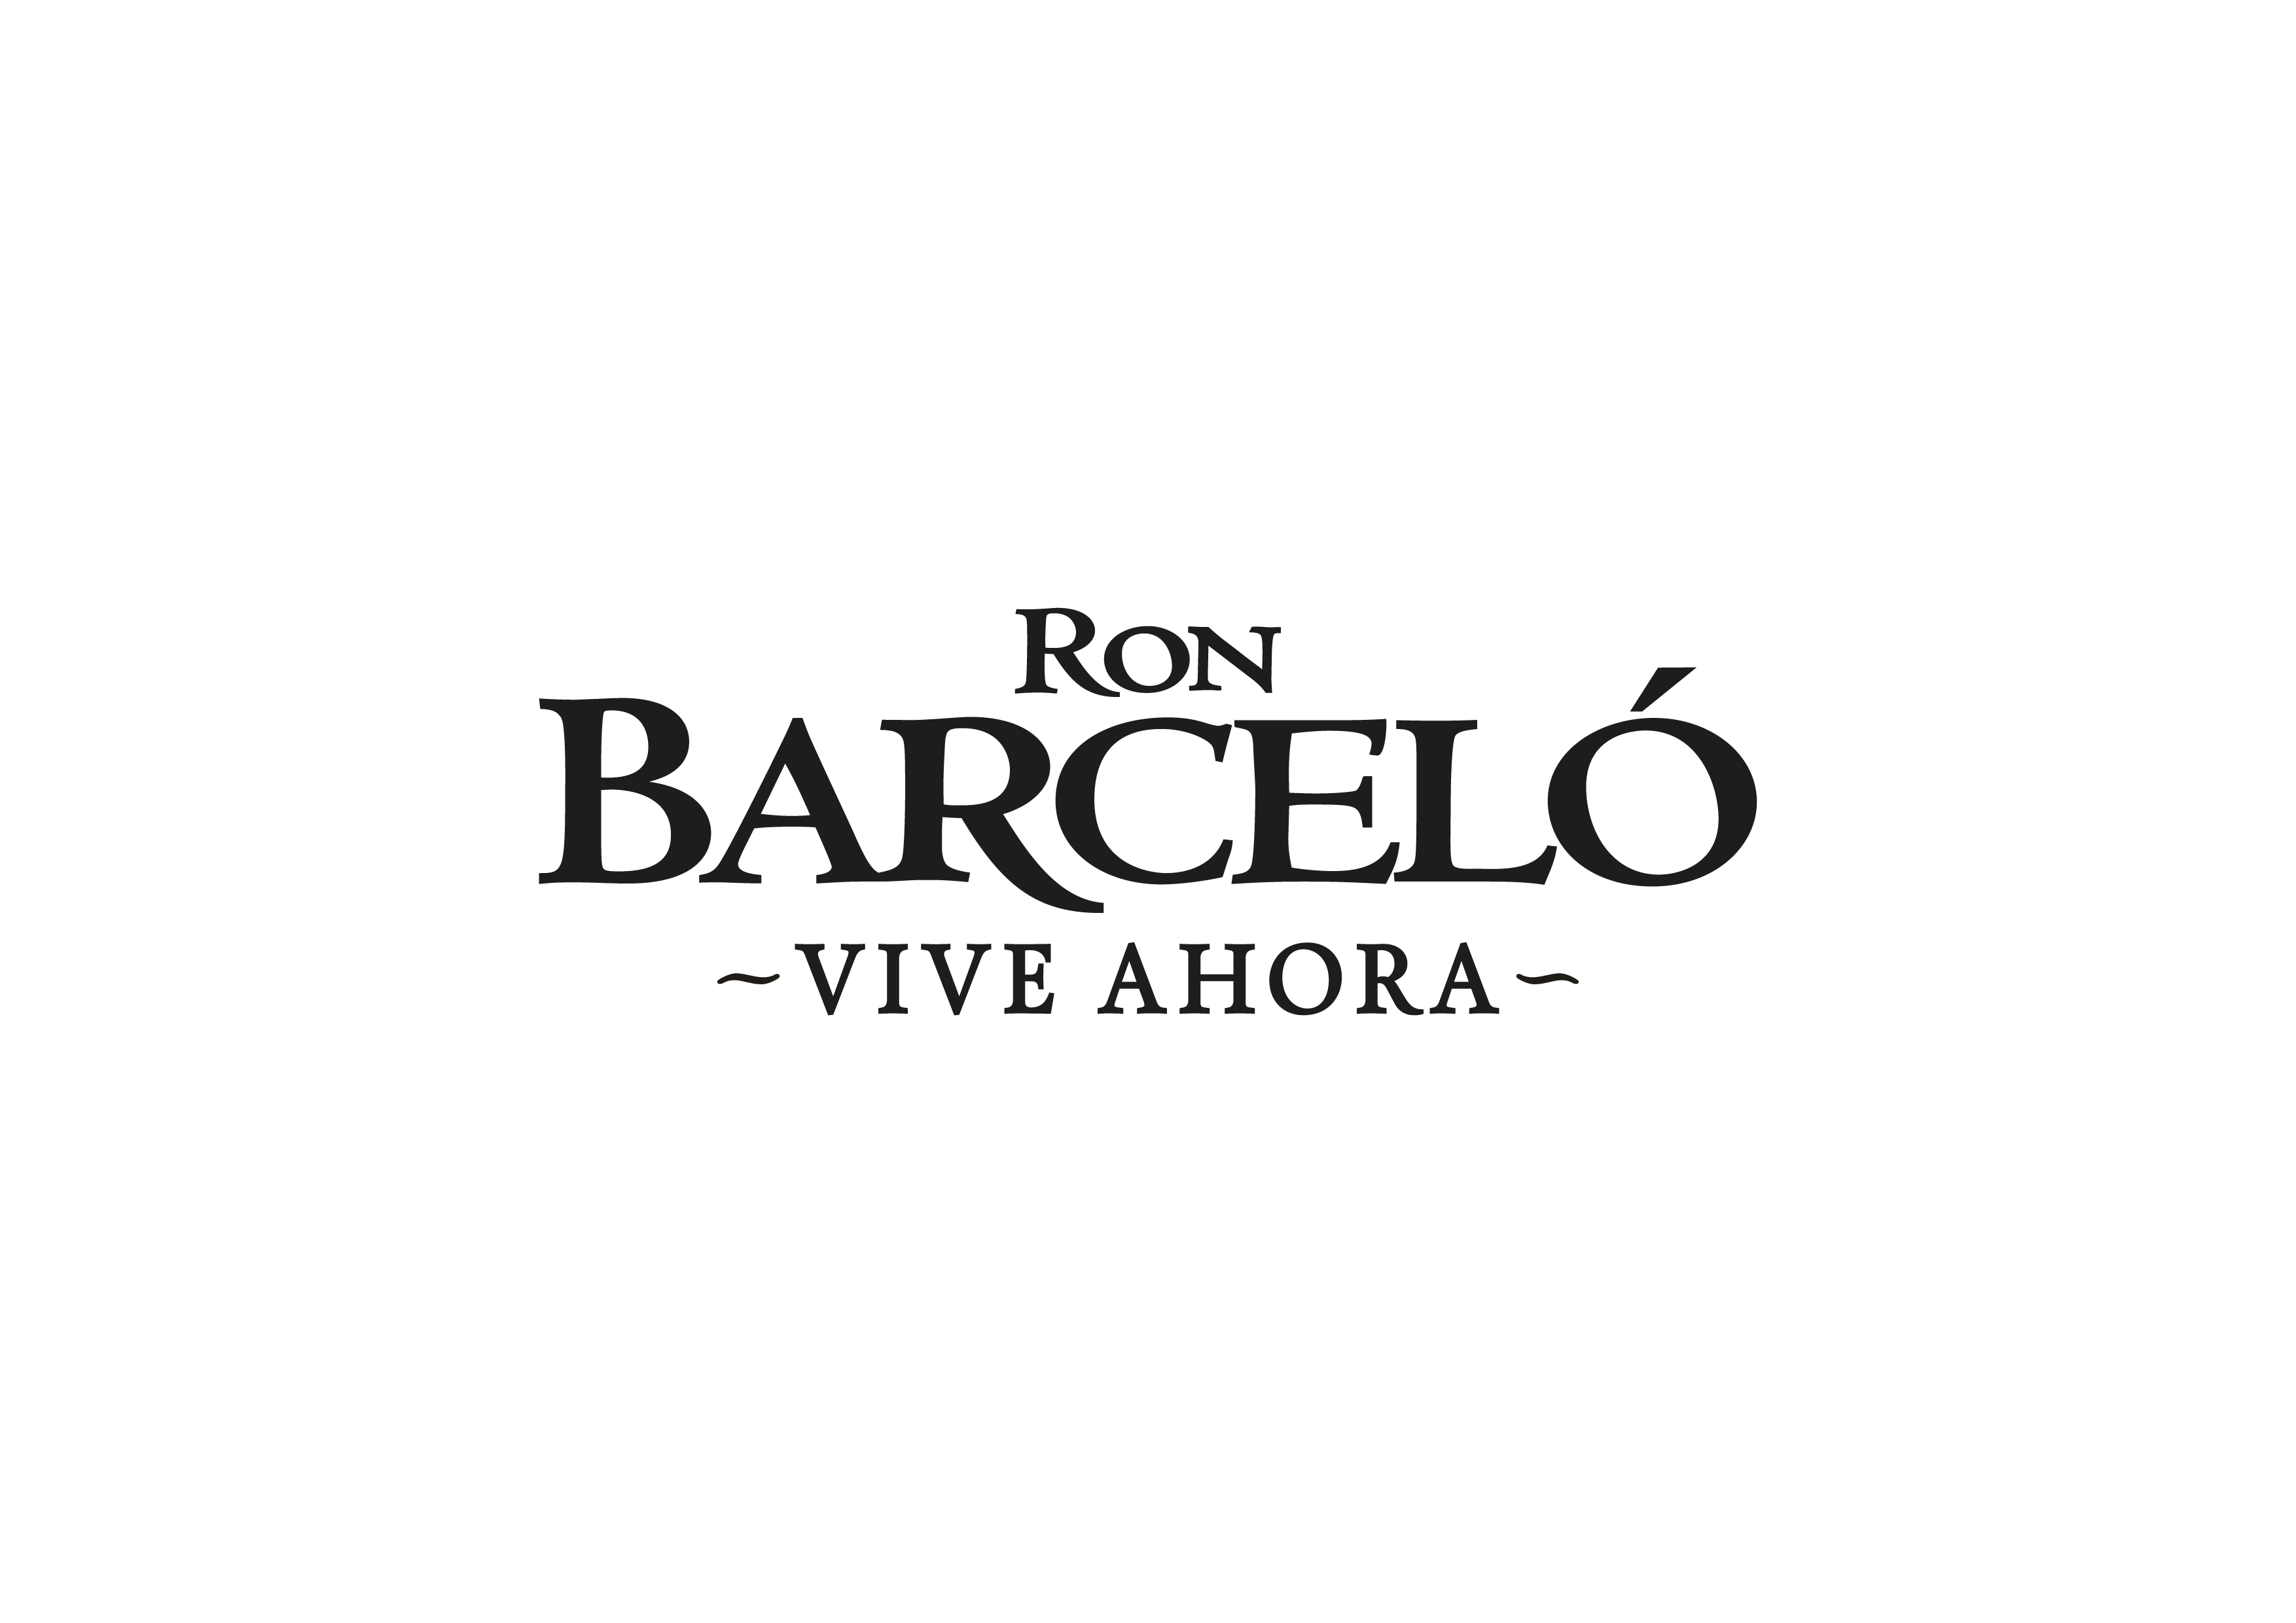 Barcelo Logo - ron barcelo logo png - AbeonCliparts | Cliparts & Vectors